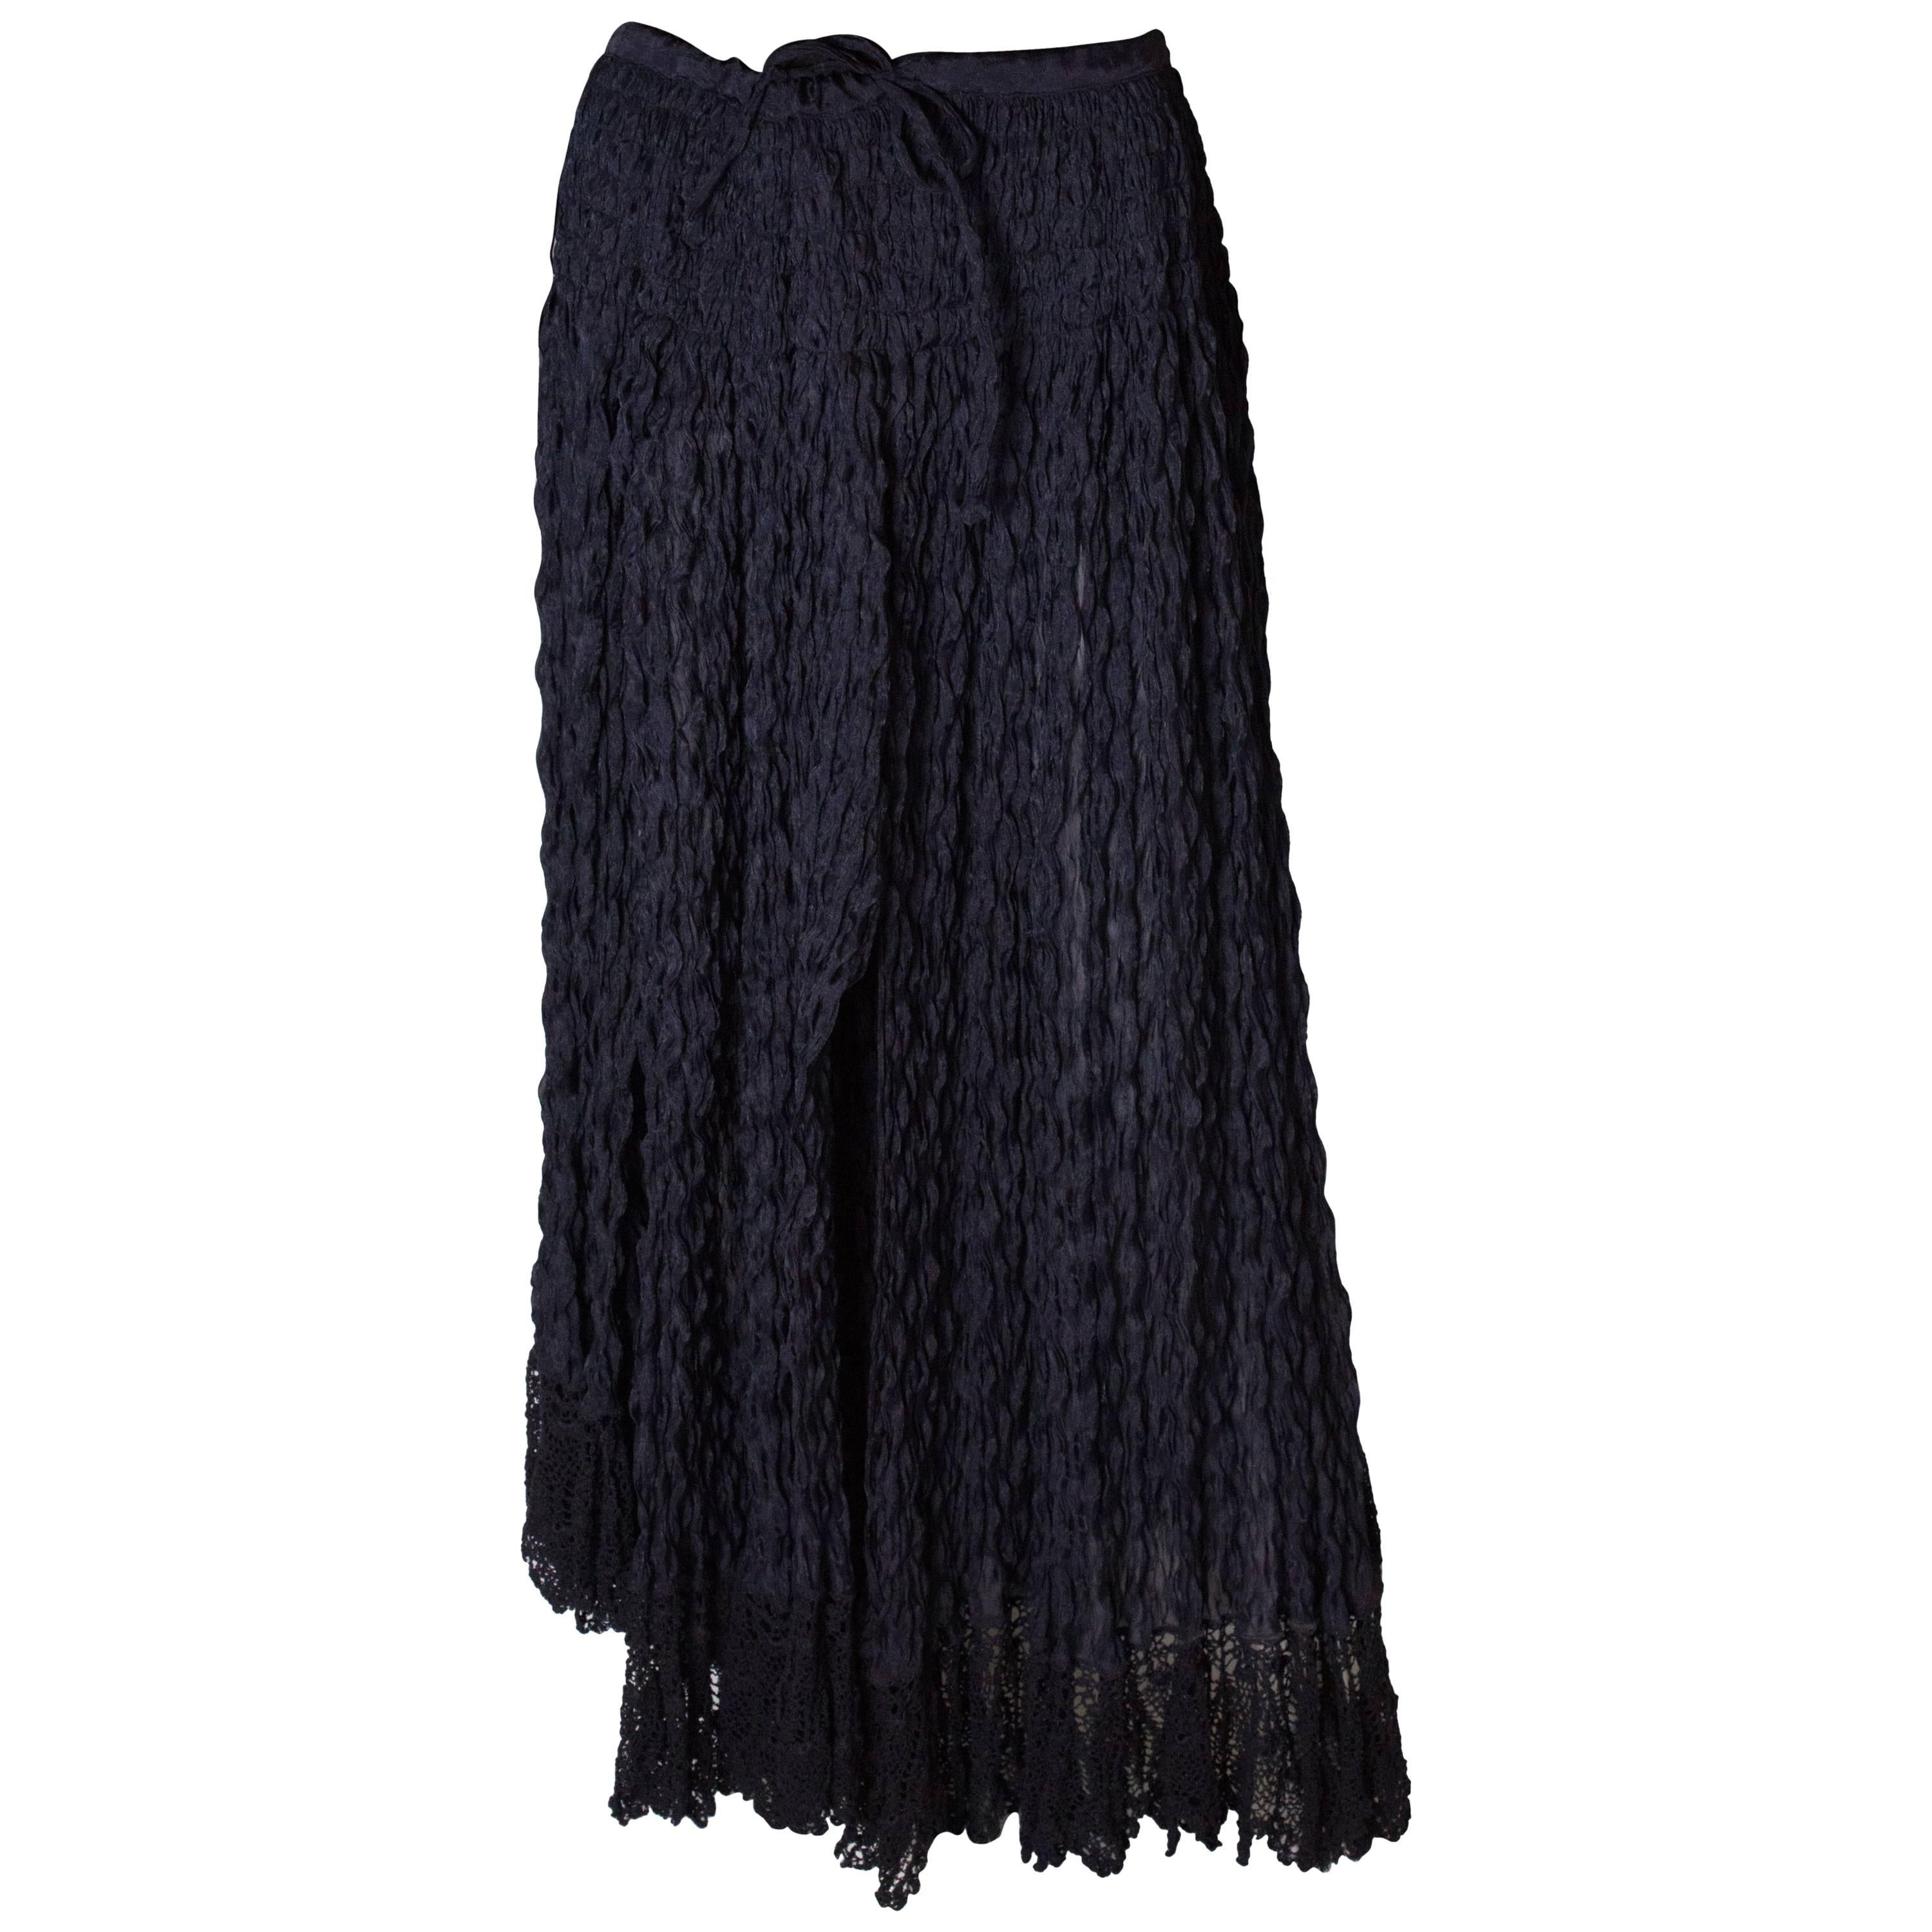 A Vintage 1990s dark navy long ruffle summer skirt by Romeo Gigli 